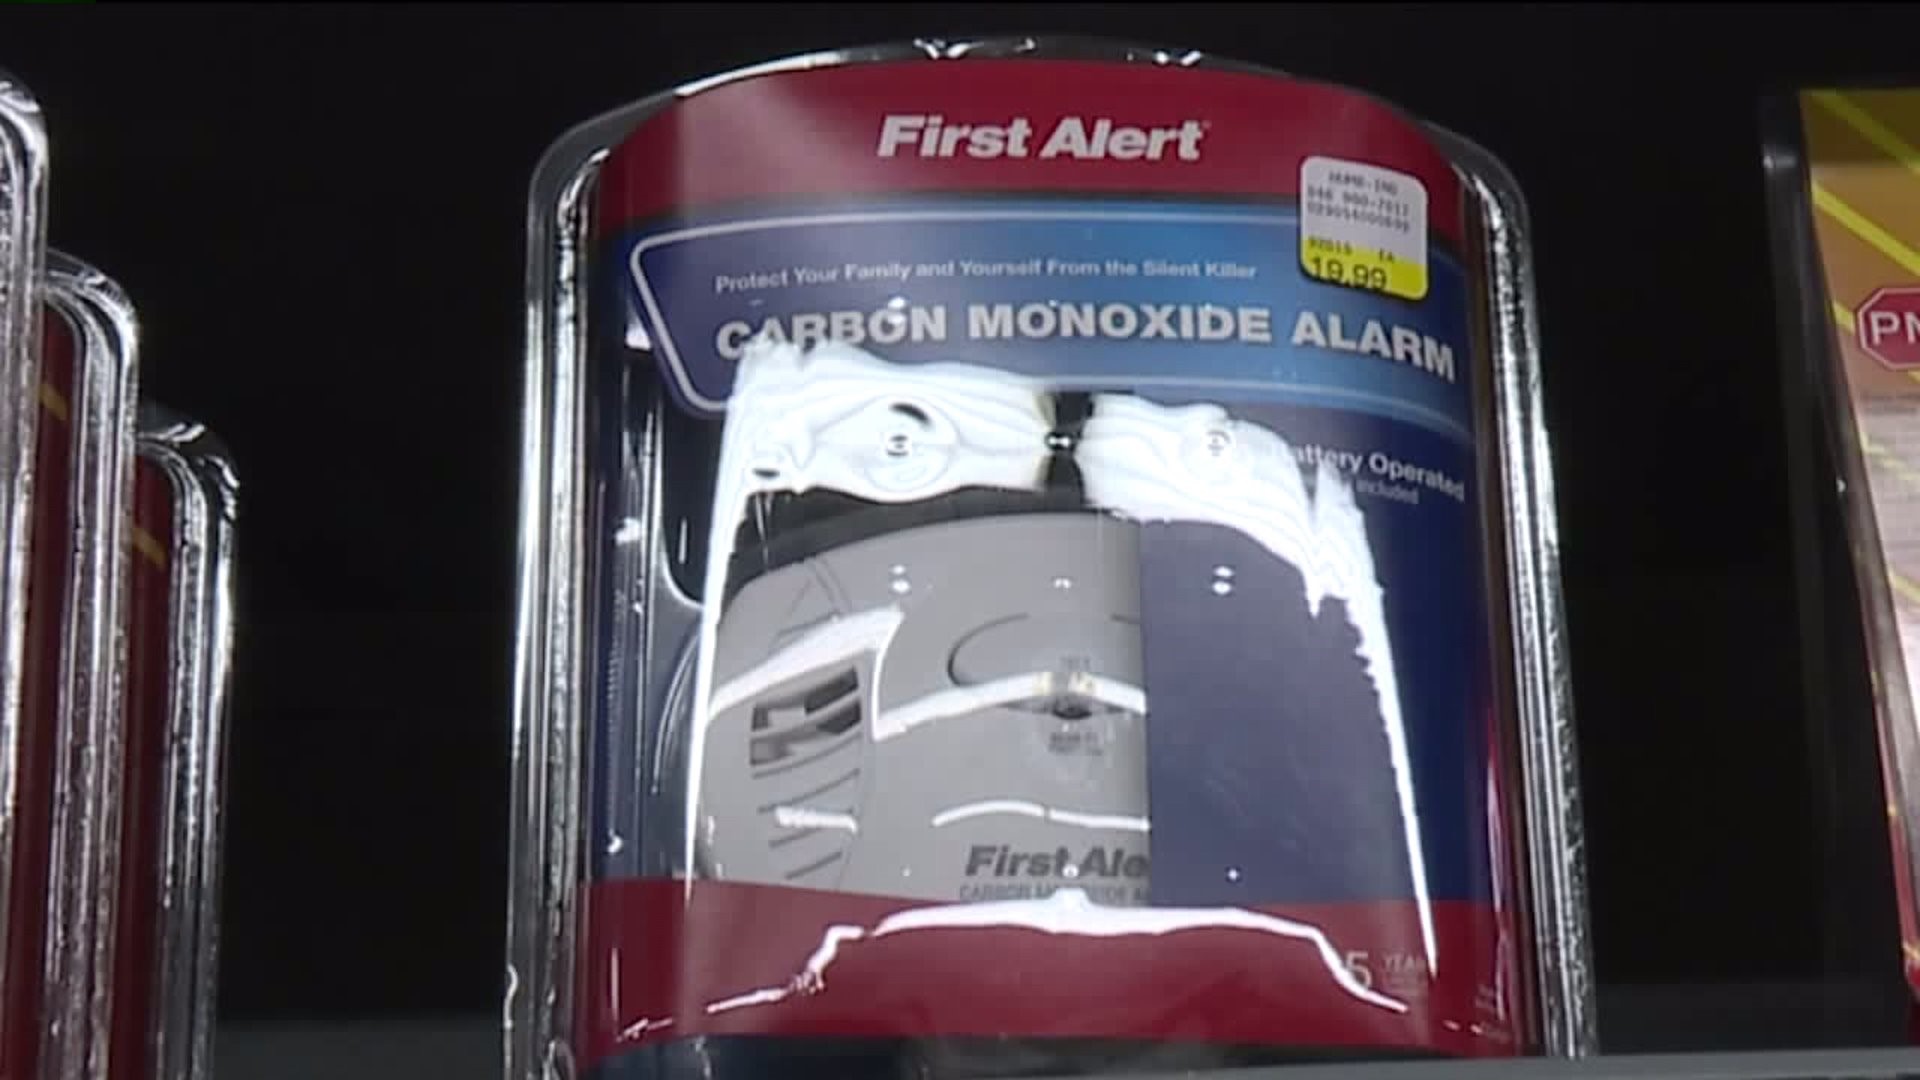 Hazleton Fire Chief Warns Residents to Buy Carbon Monoxide Detectors